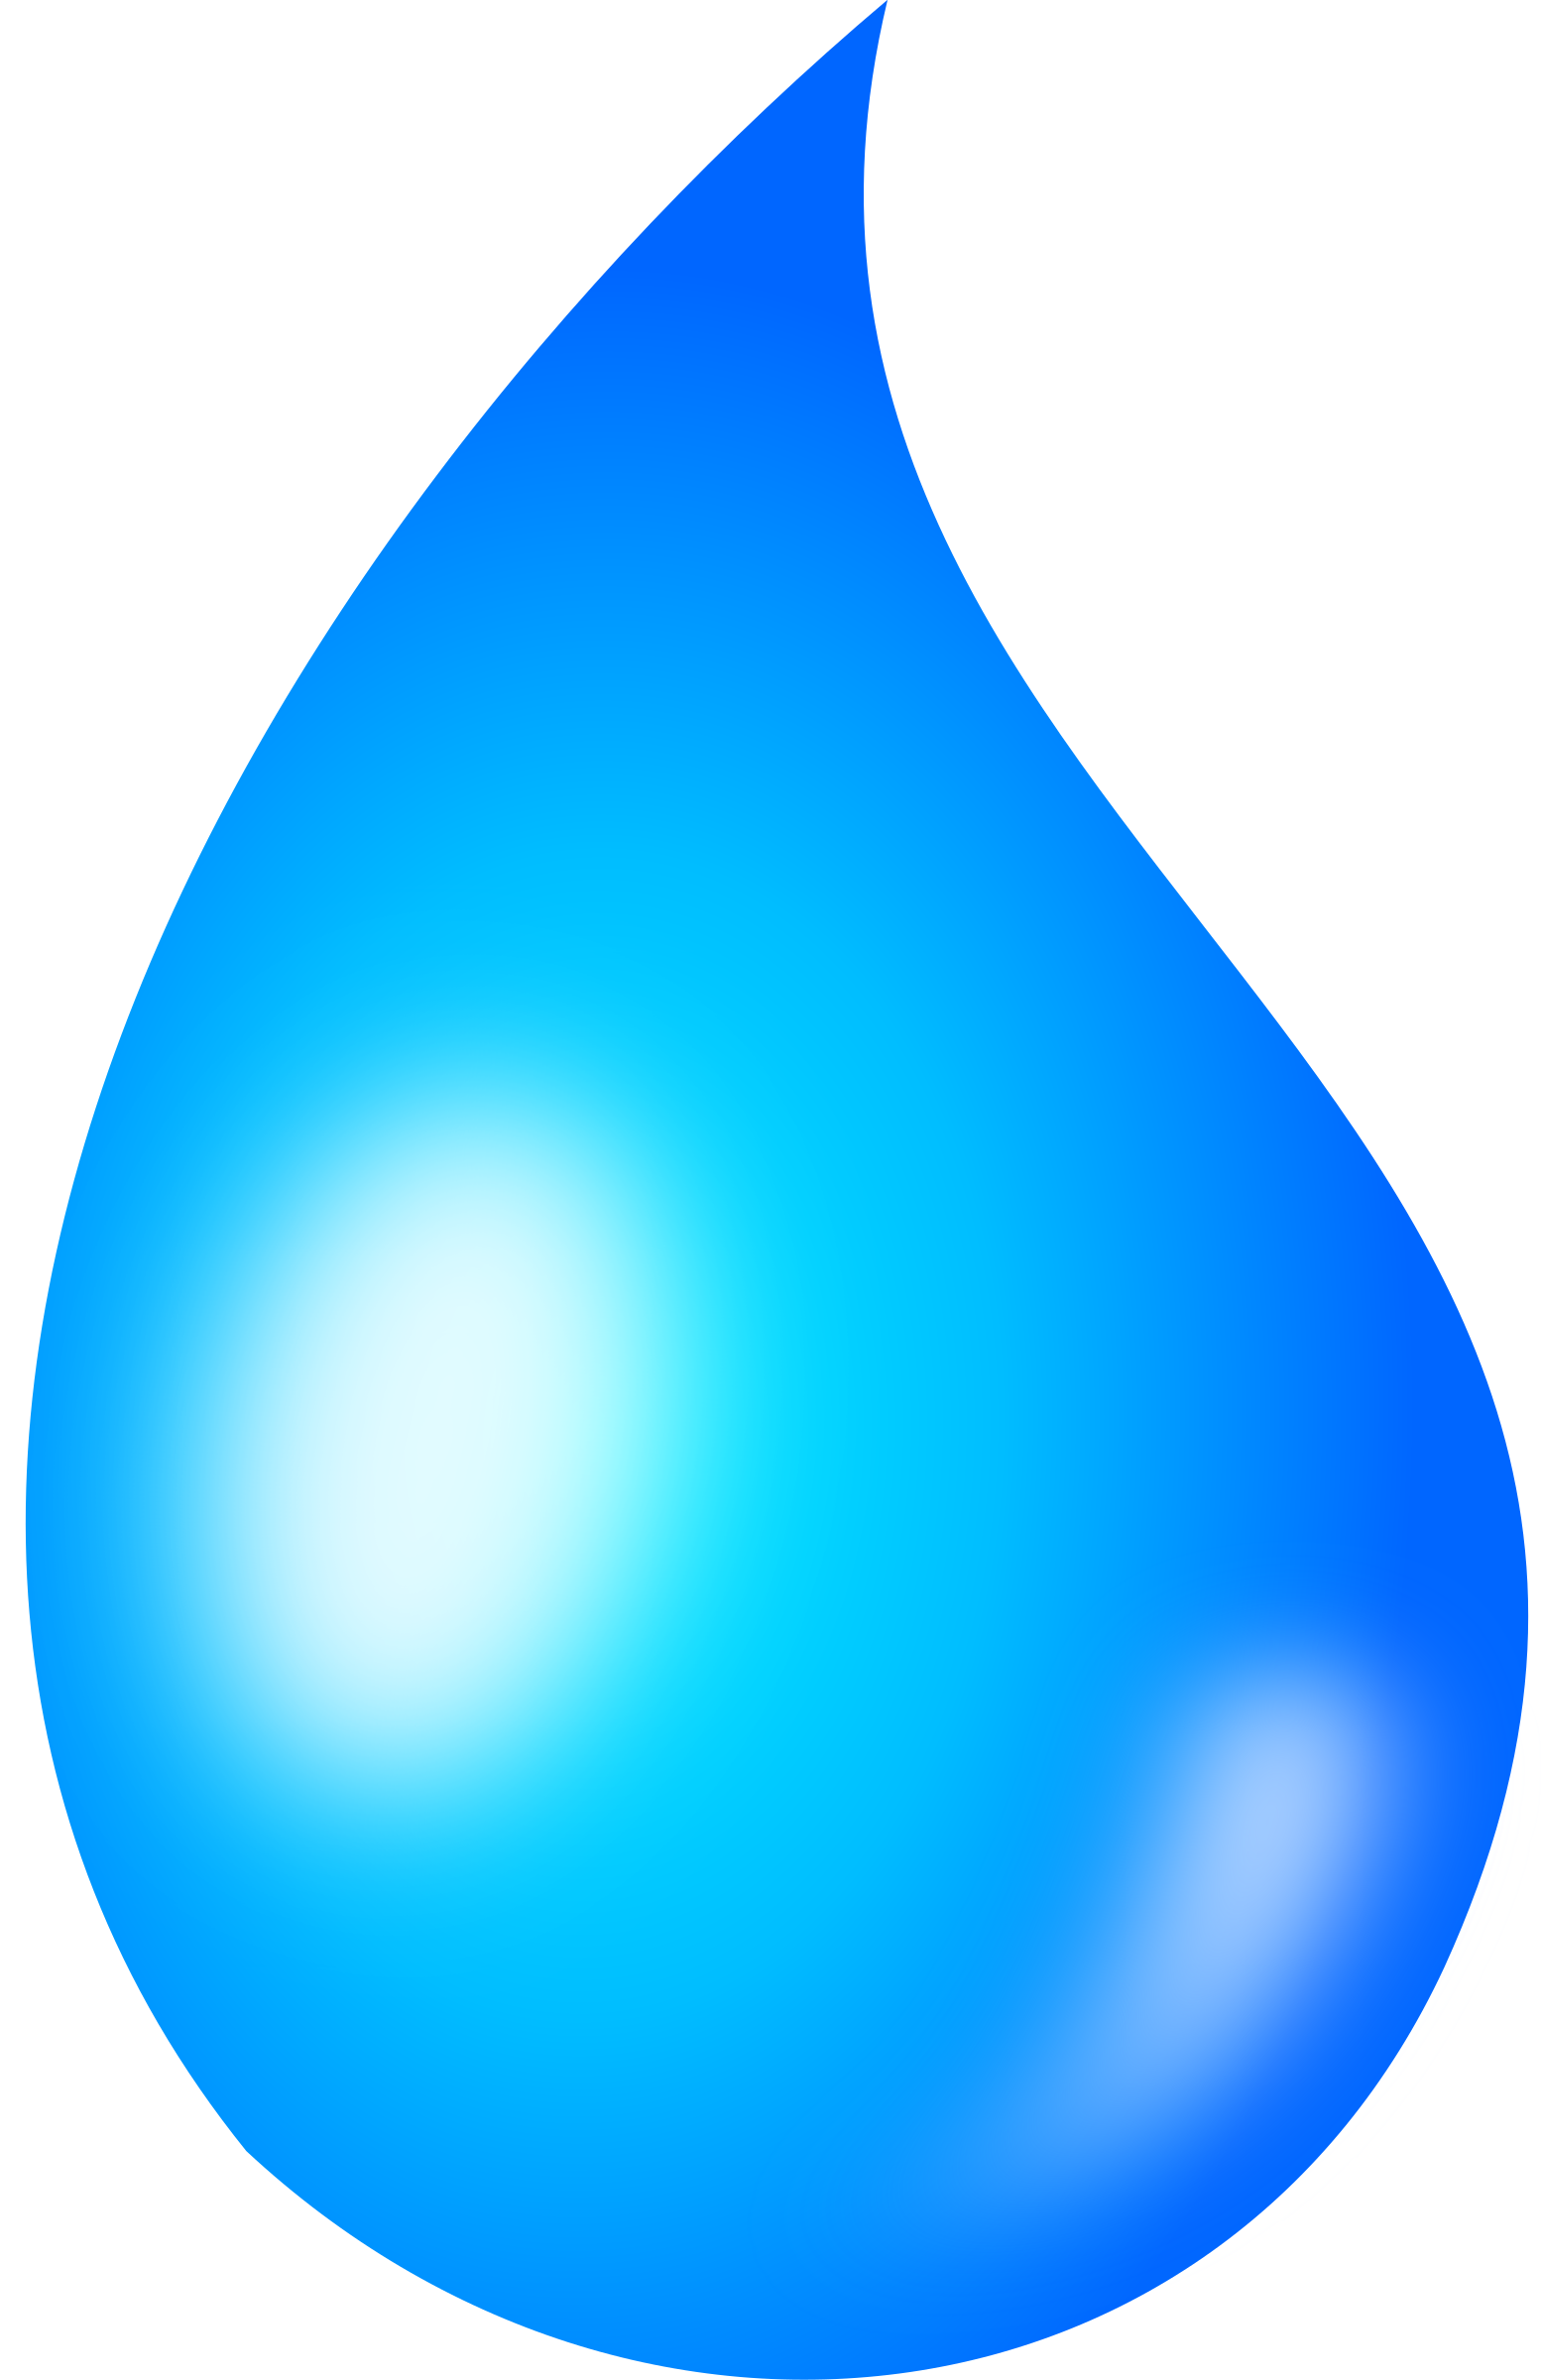 Water drop clipart transparent